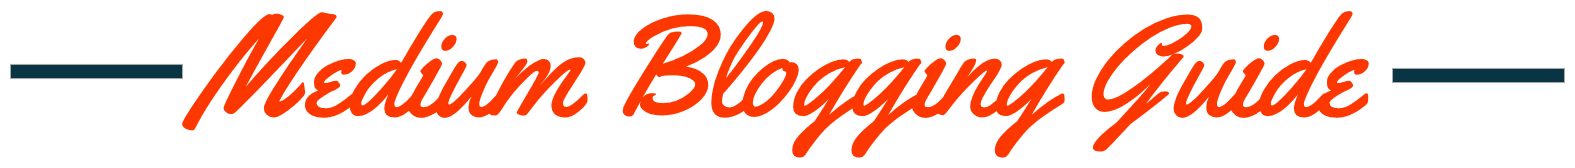 medium blogging guide, blogging guide, blogging guide publication, medium writer publication, new medium writers, medium post